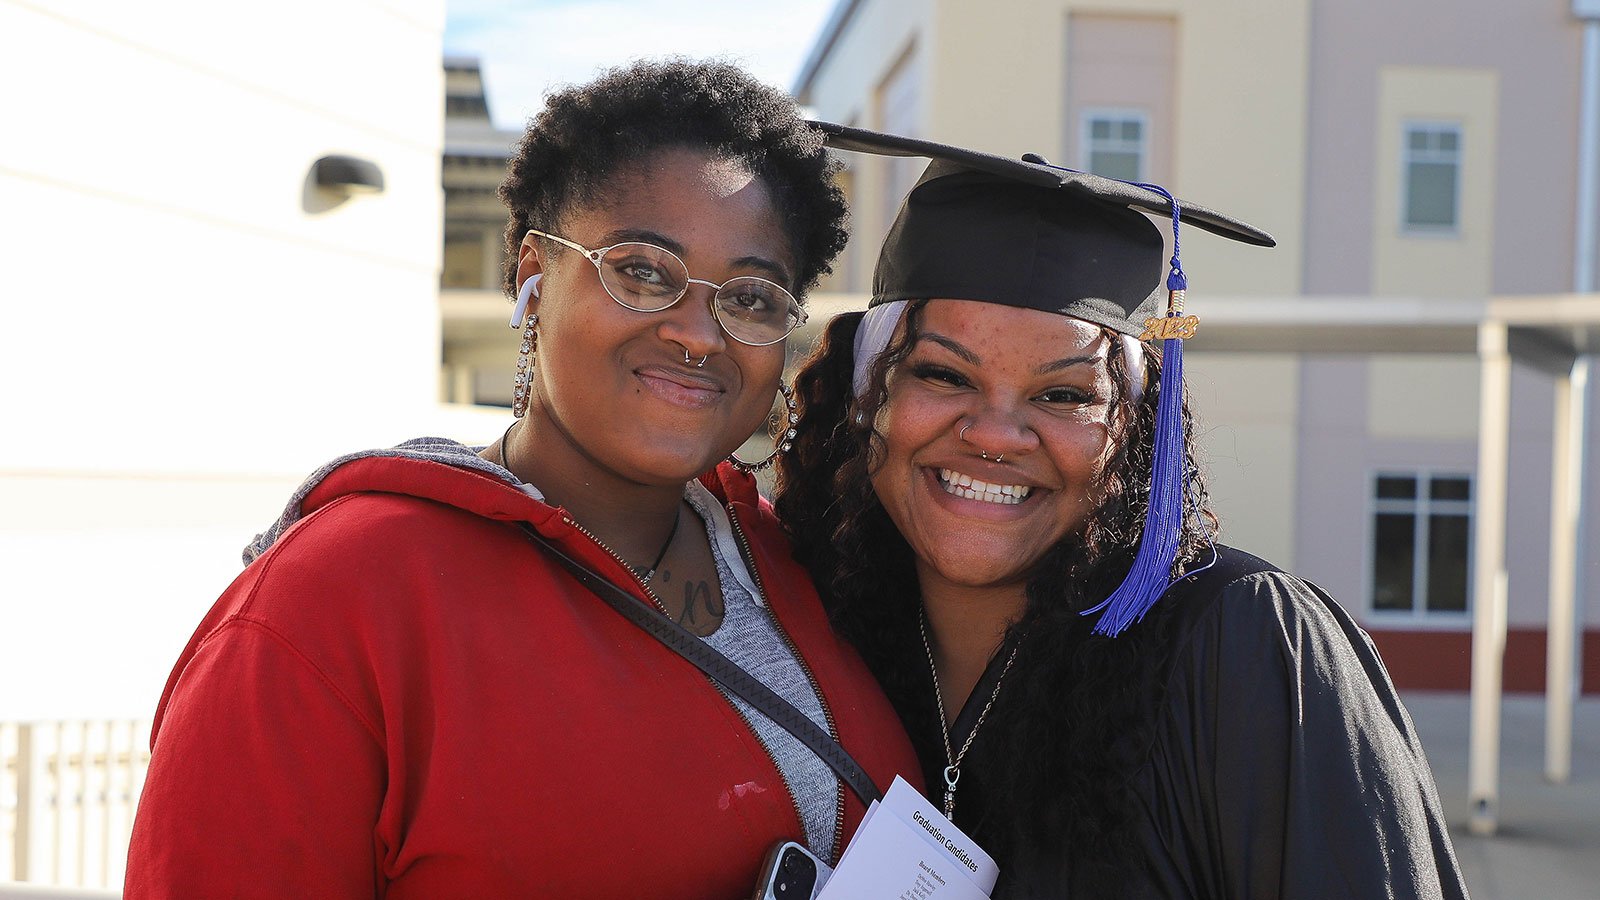 Graduate smiles alongside a family member at graduation ceremony